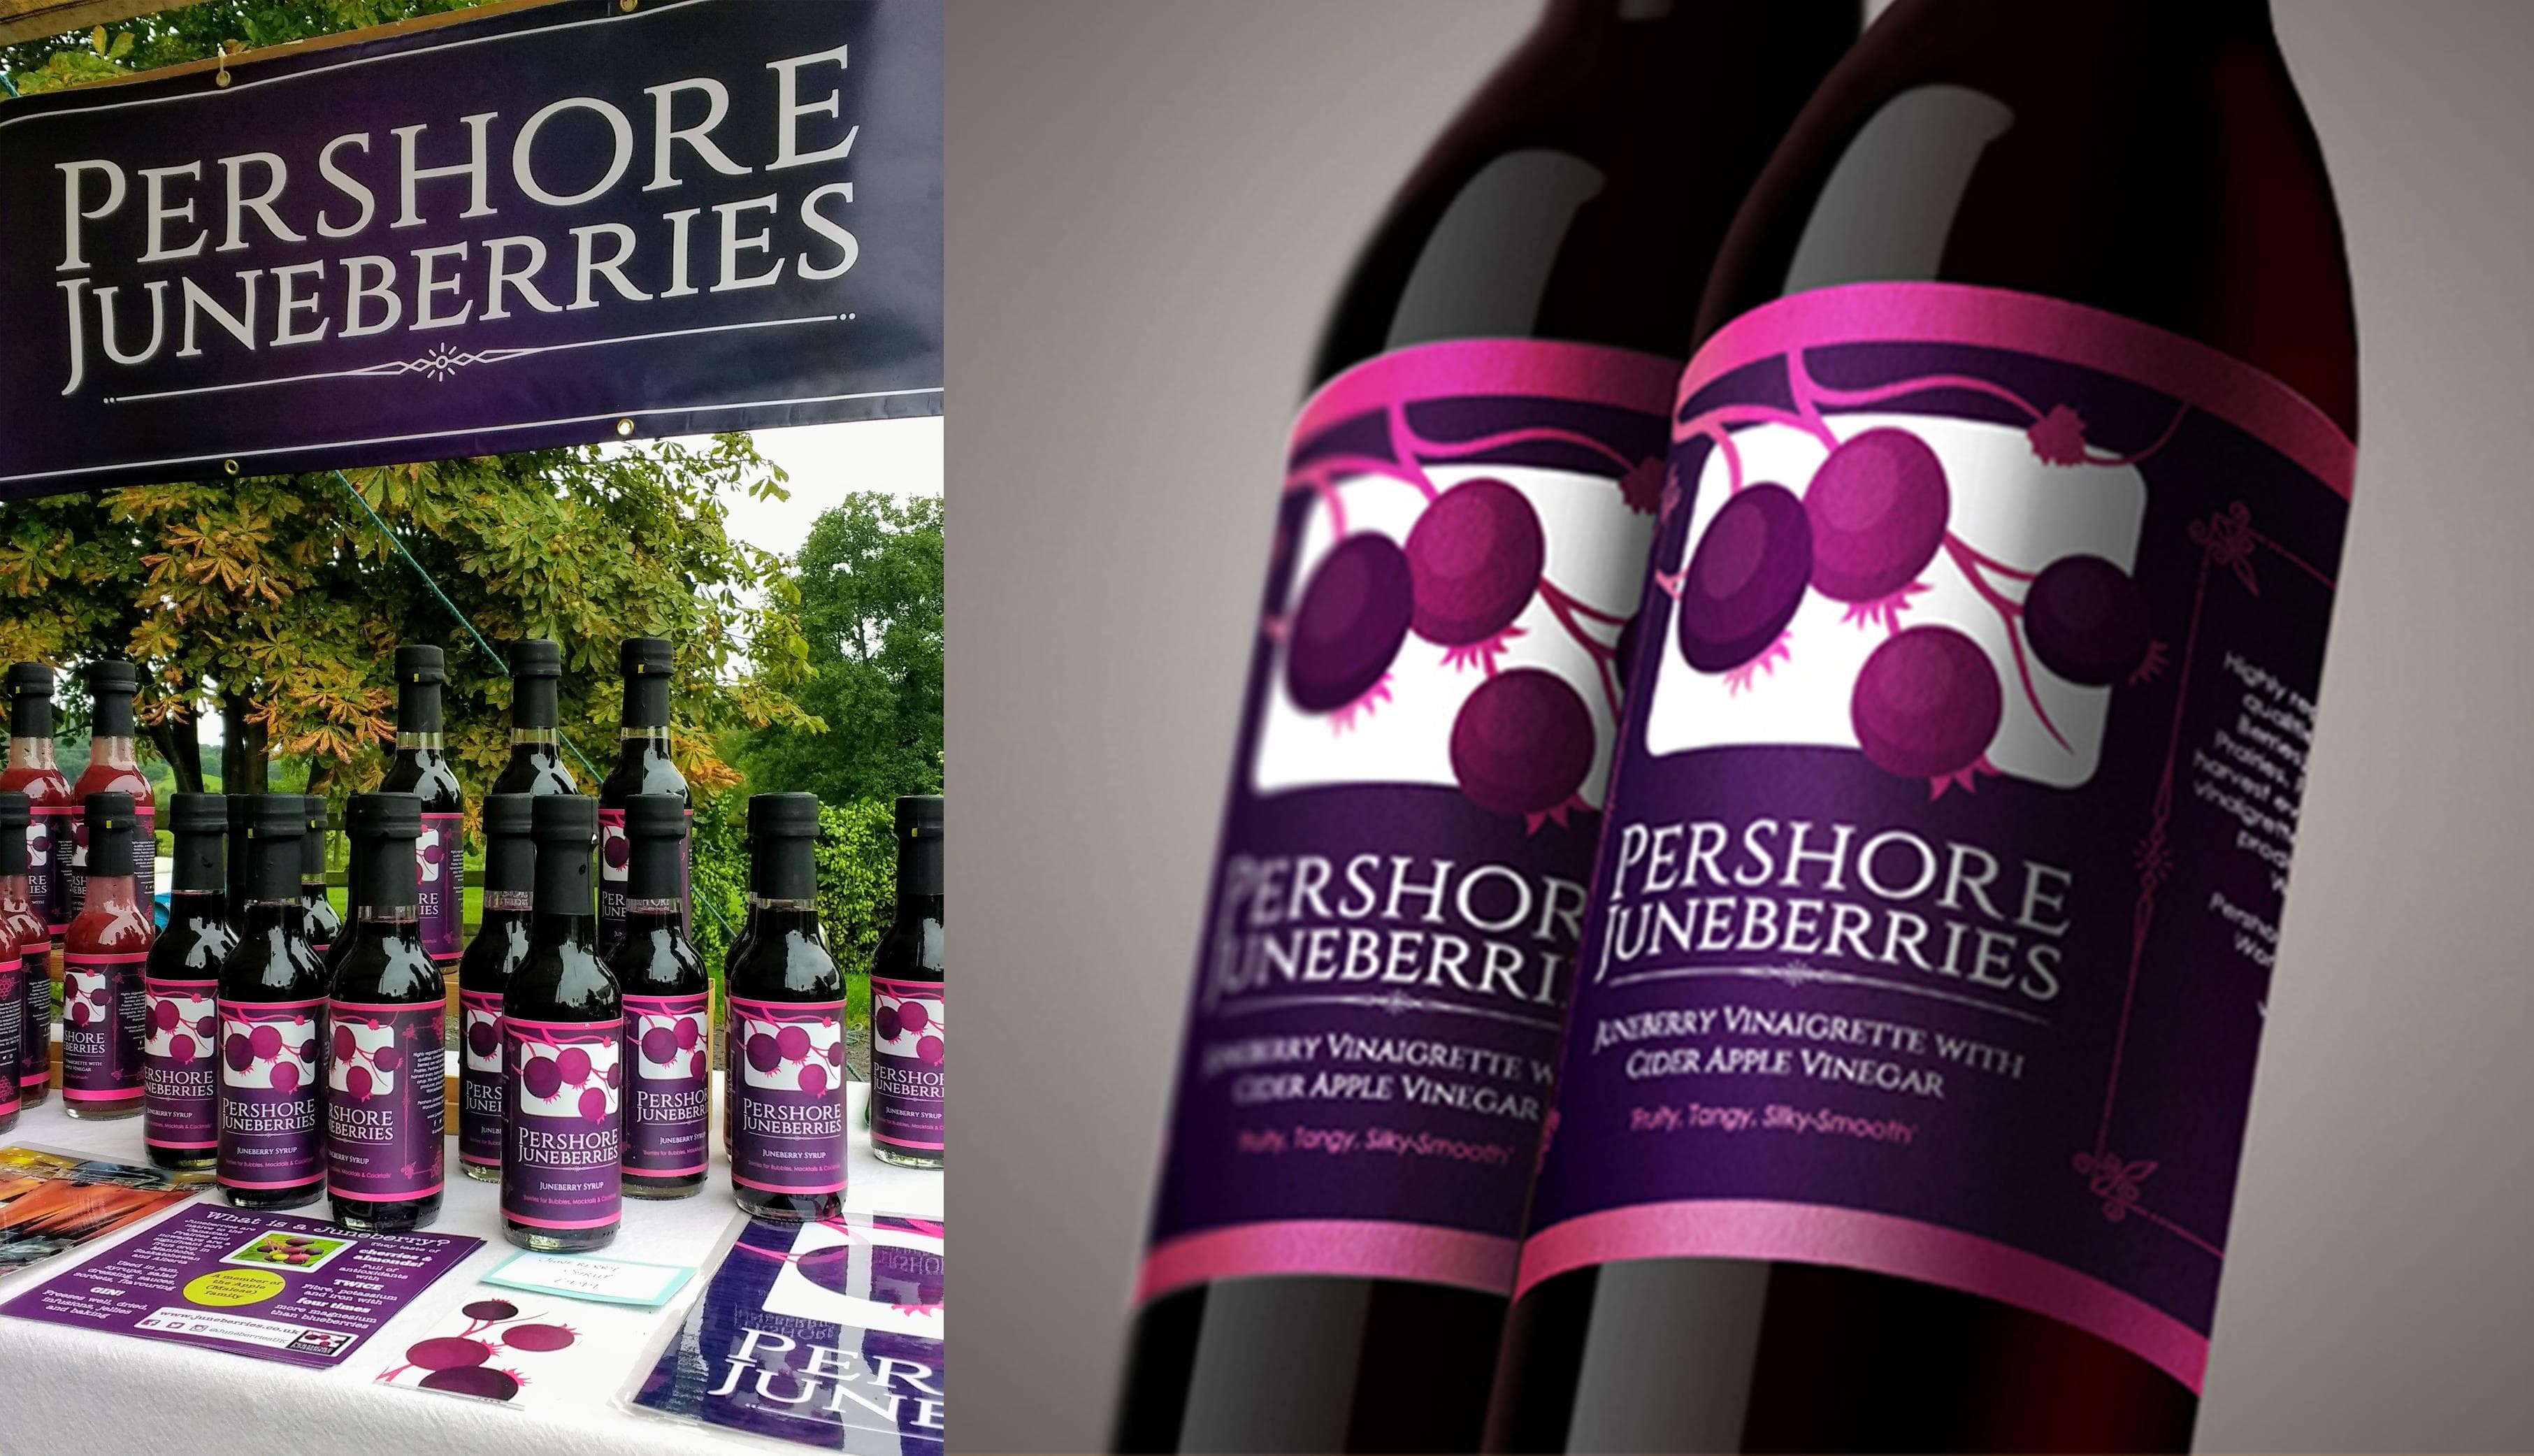 Pershore Juneberries Ltd